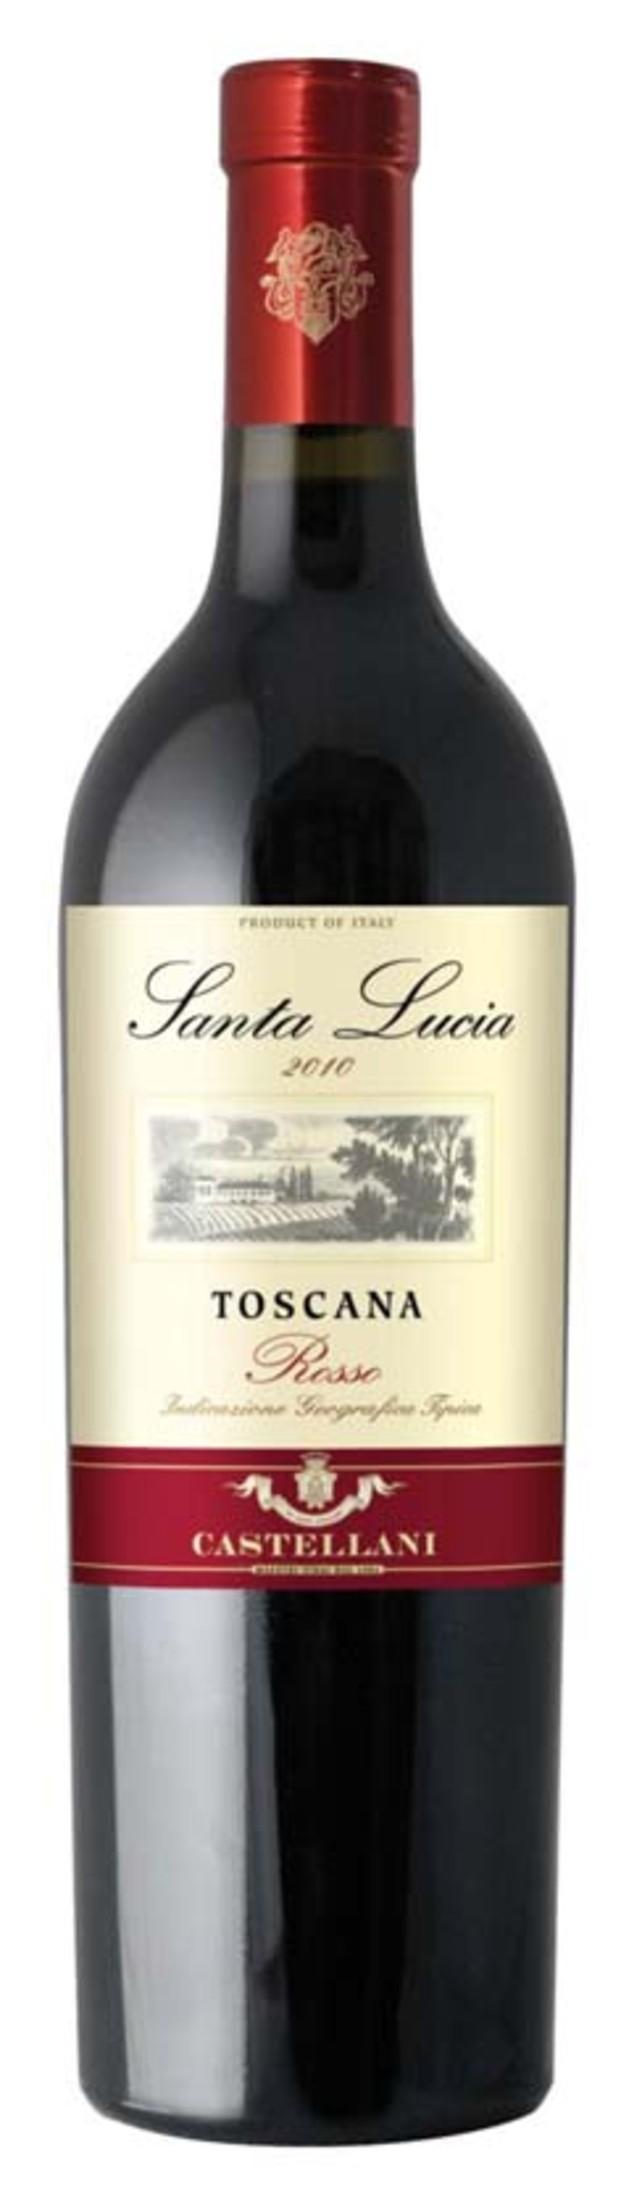 Toscana Rosso Santa Lucia. Toscana 85% Sangiovese, 15% Cabernet Sauvignon